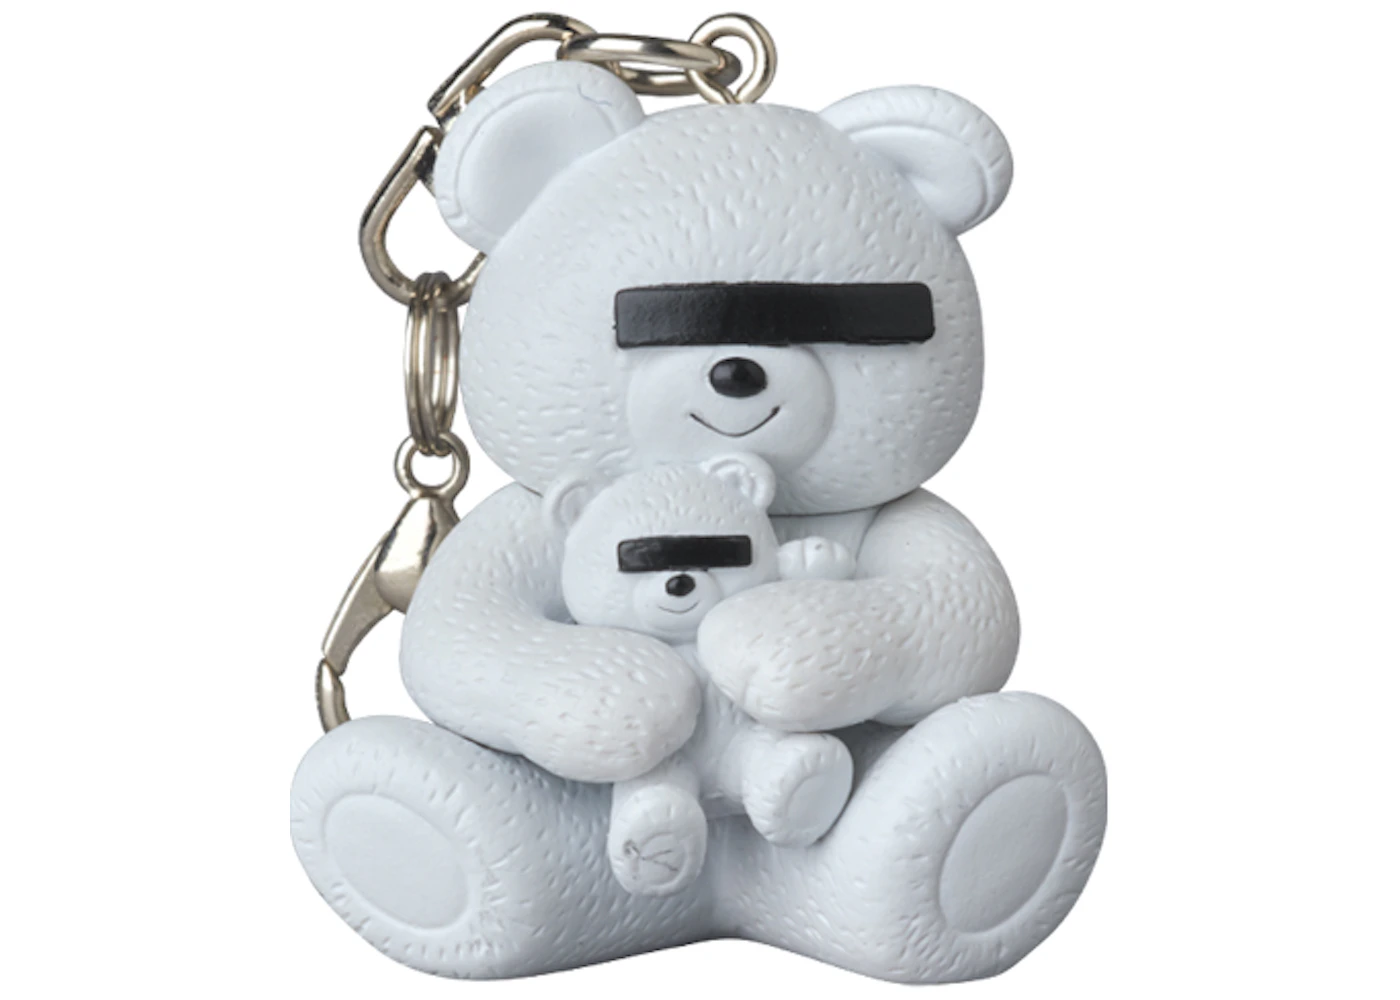 Undercover x Medicom Toy Bear Keychain White - US